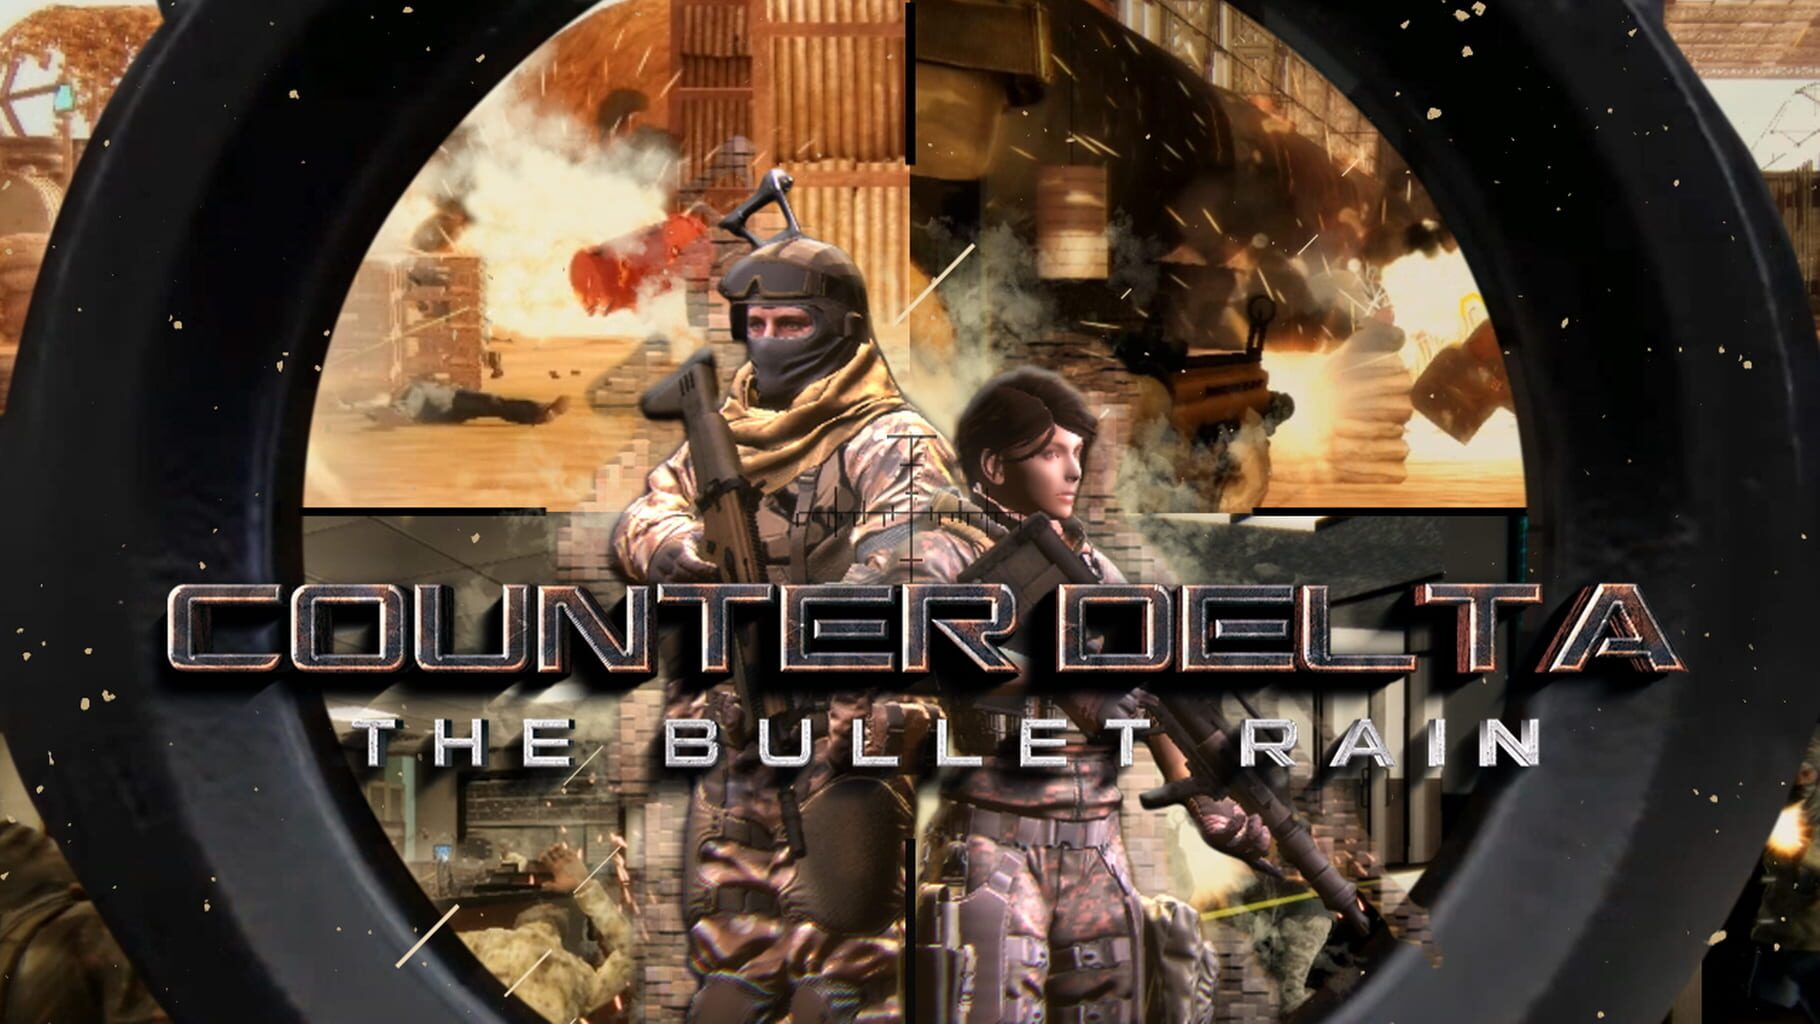 Counter Delta: The Bullet Rain artwork